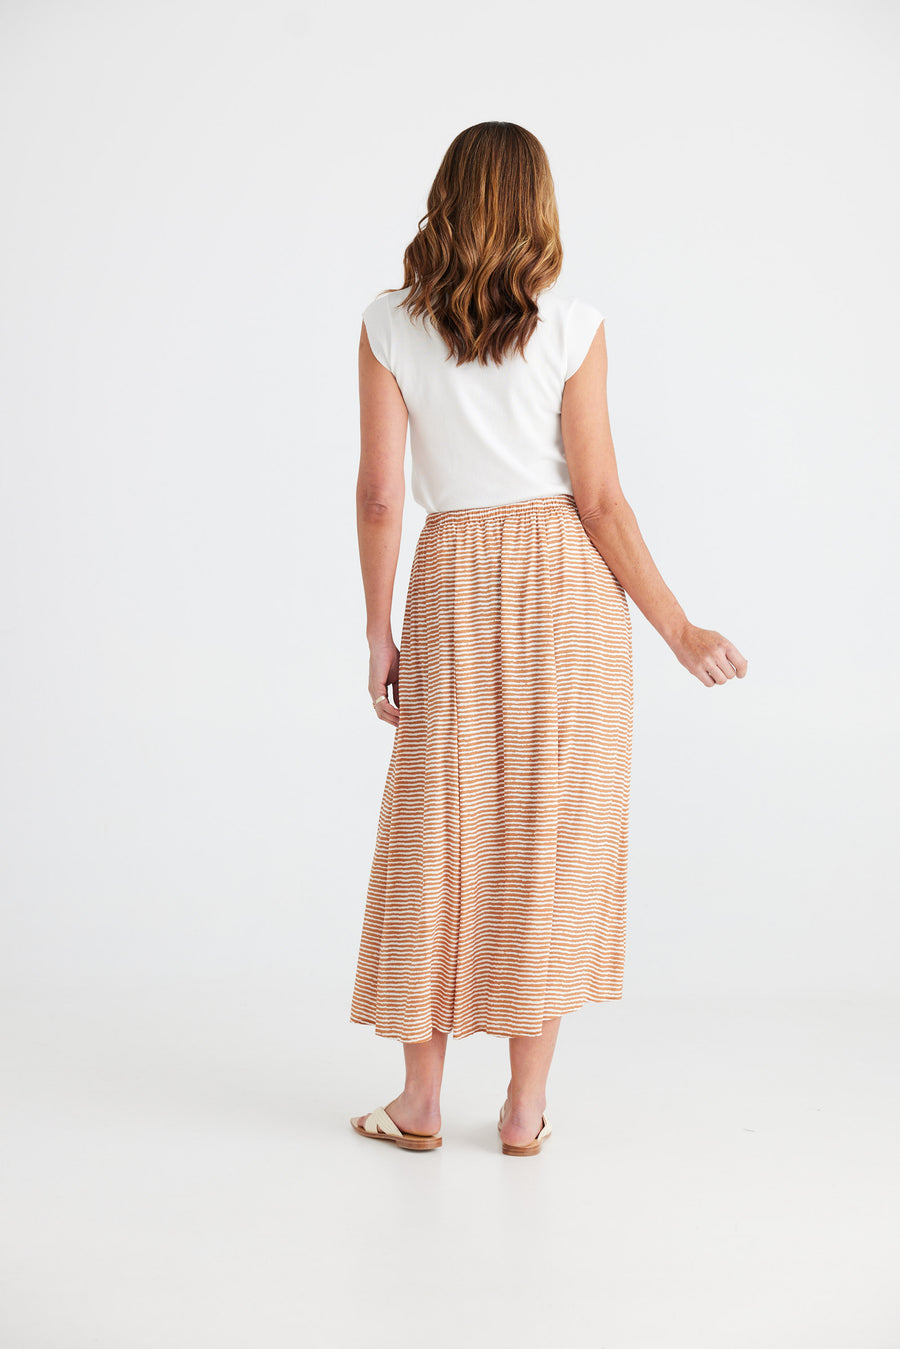 Second Valley Skirt - Tan Stripe